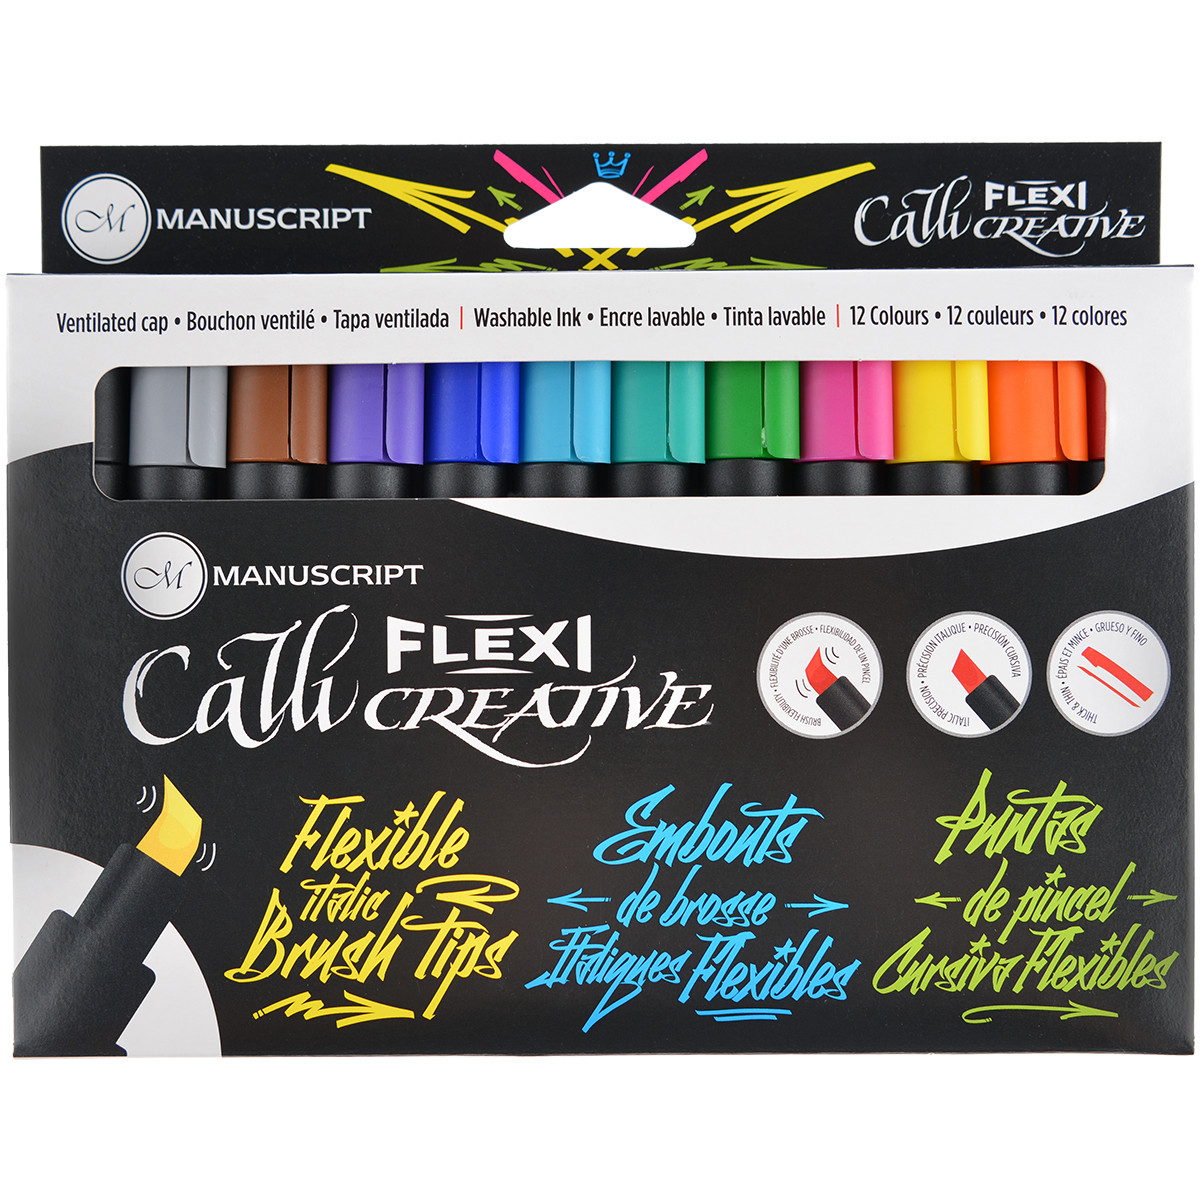 Manuscript Callicreative Flexi Tipped Marker